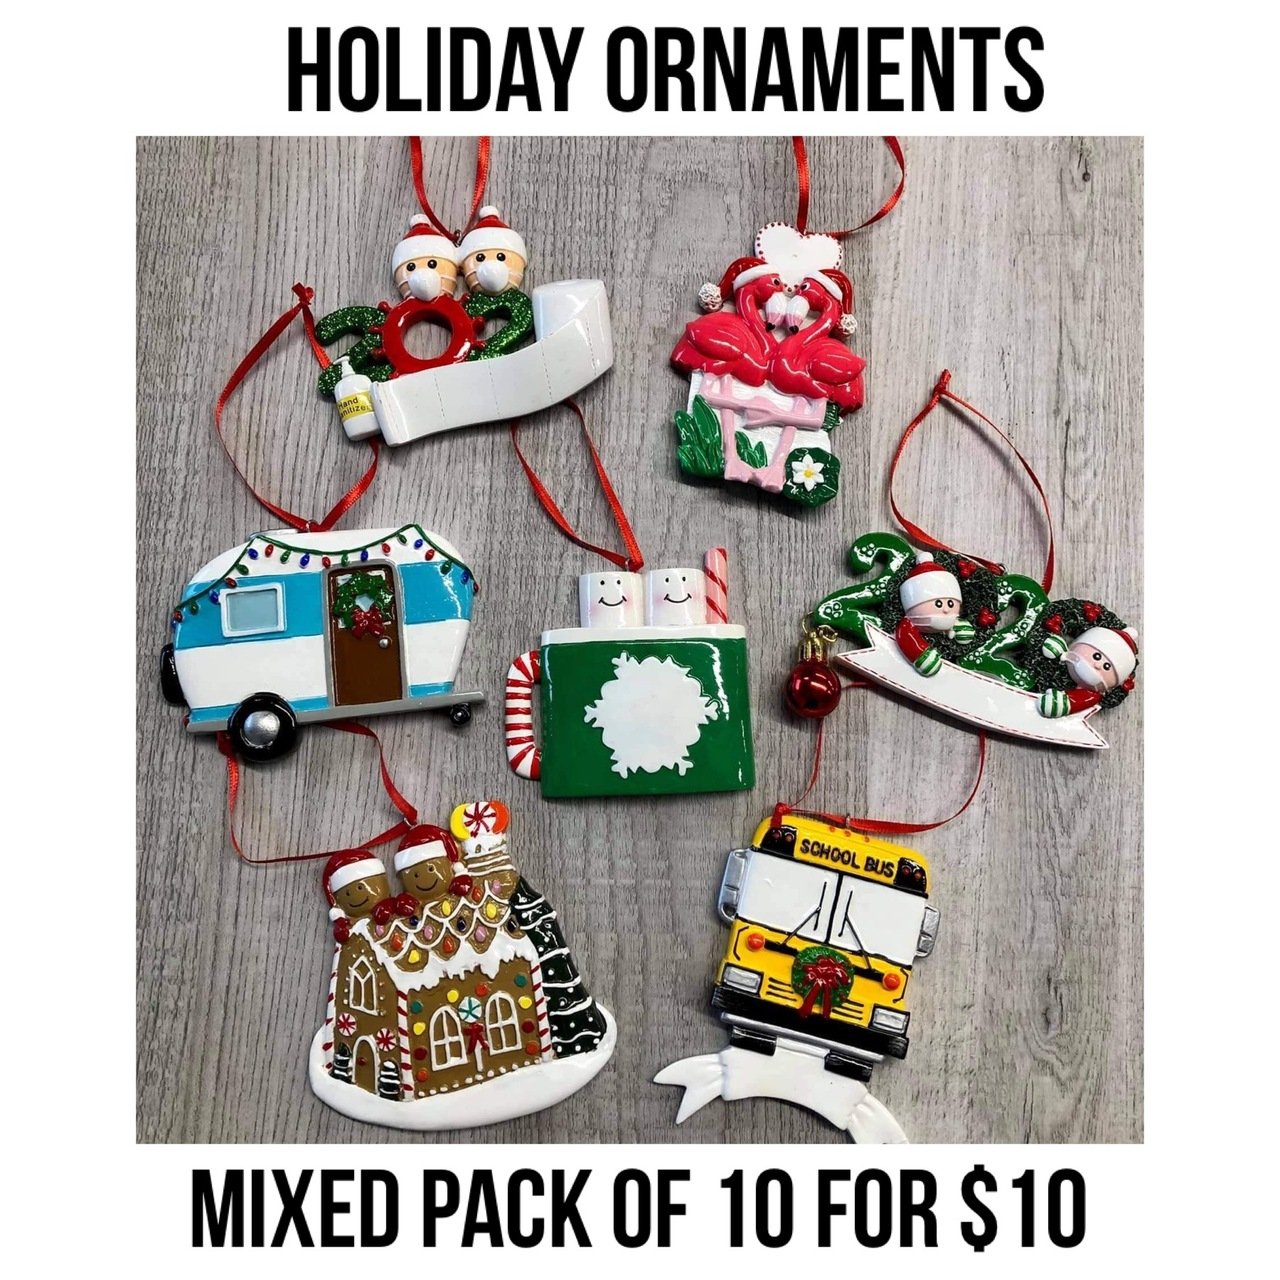 RTS - Holiday Ornaments Mixed Pack of 10